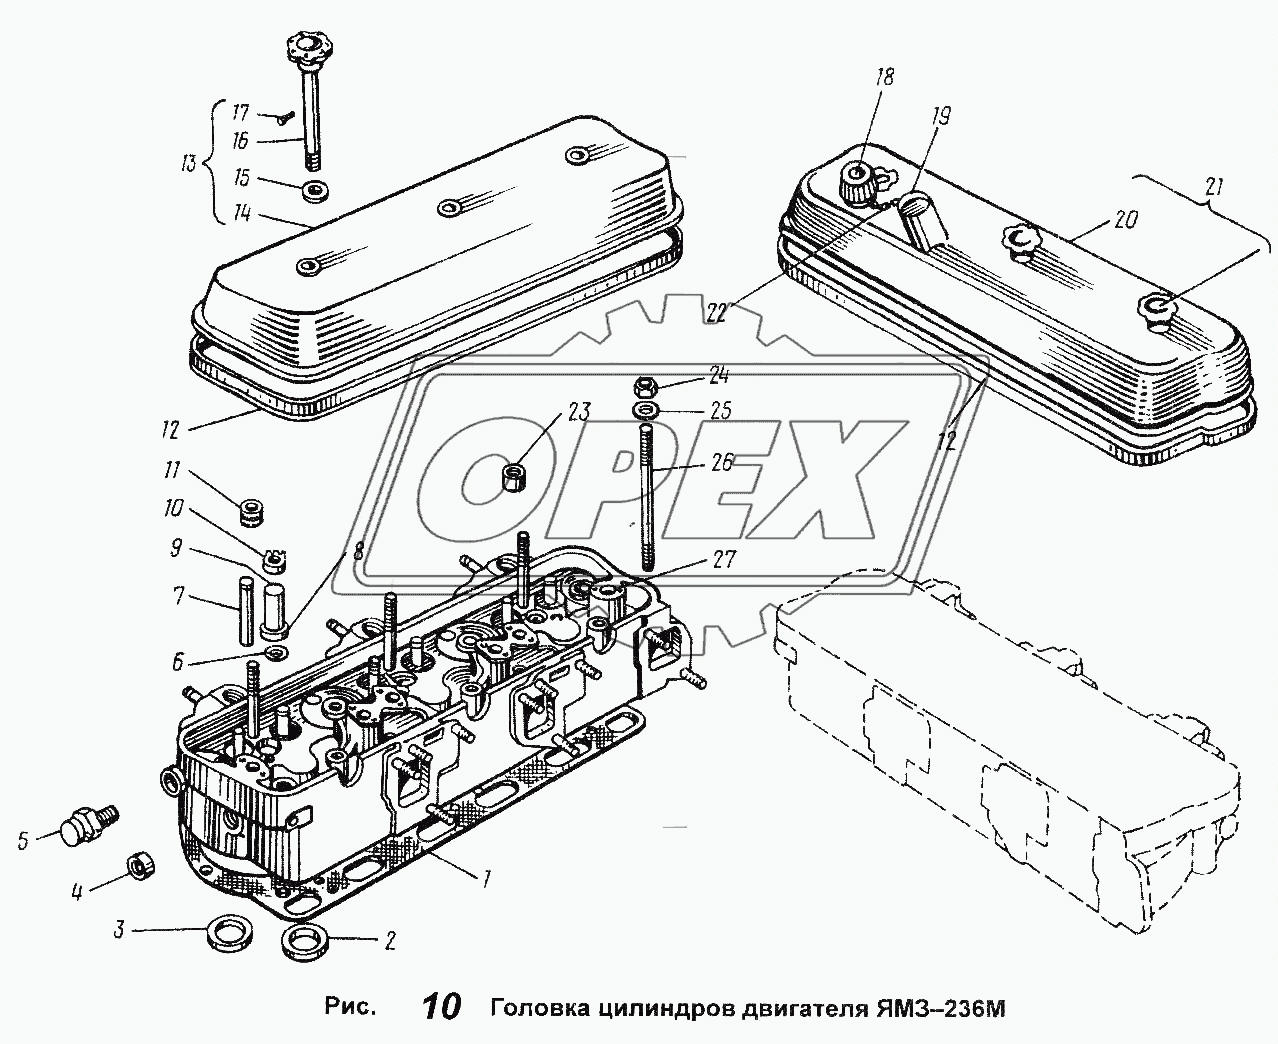 Головка цилиндров двигателя ЯМЗ-236М